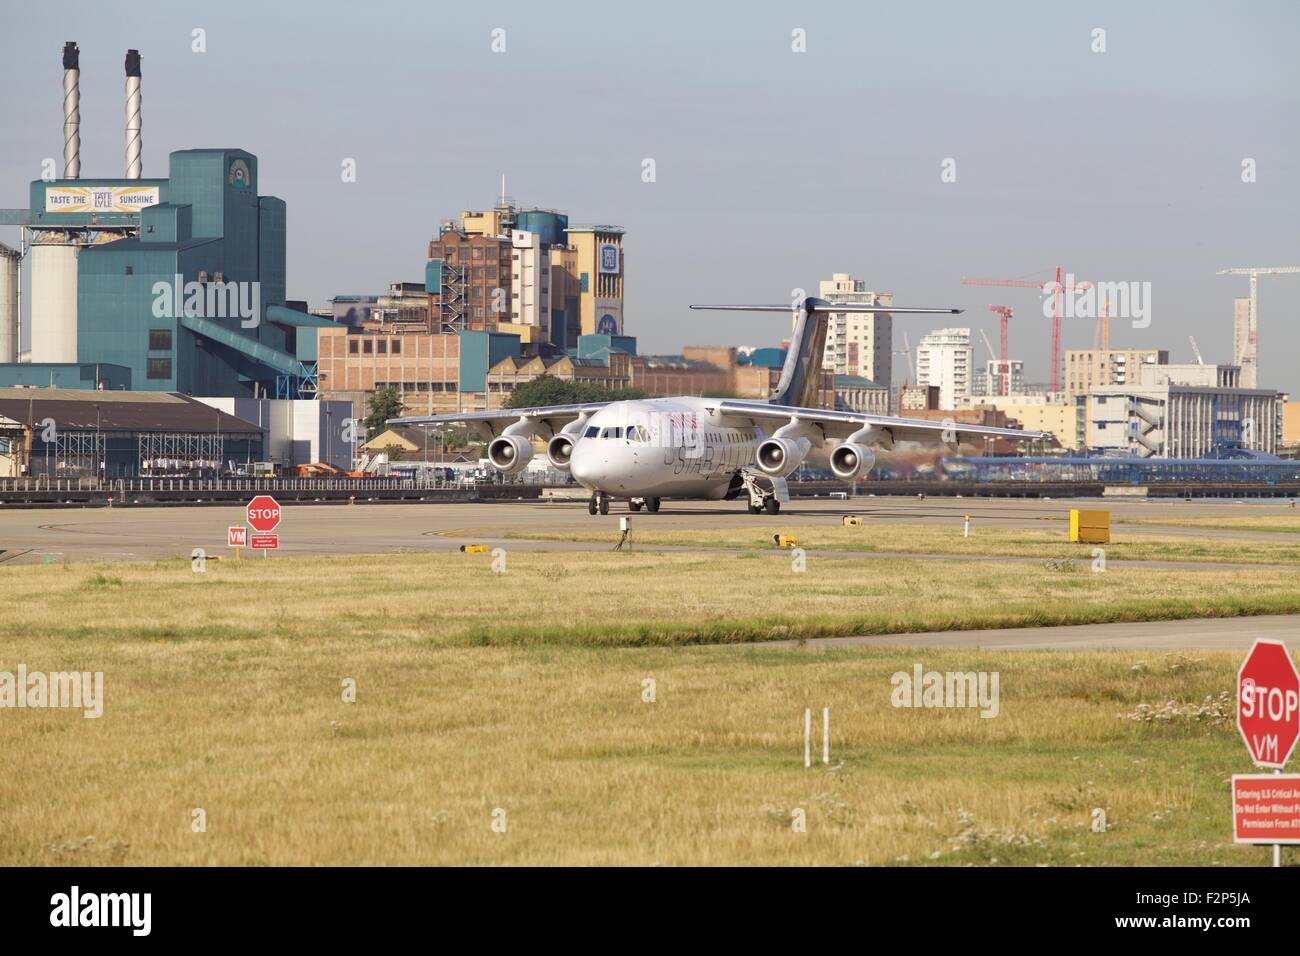 Swiss Bae 146 RJ85 at LCY London City Airport Stock Photo